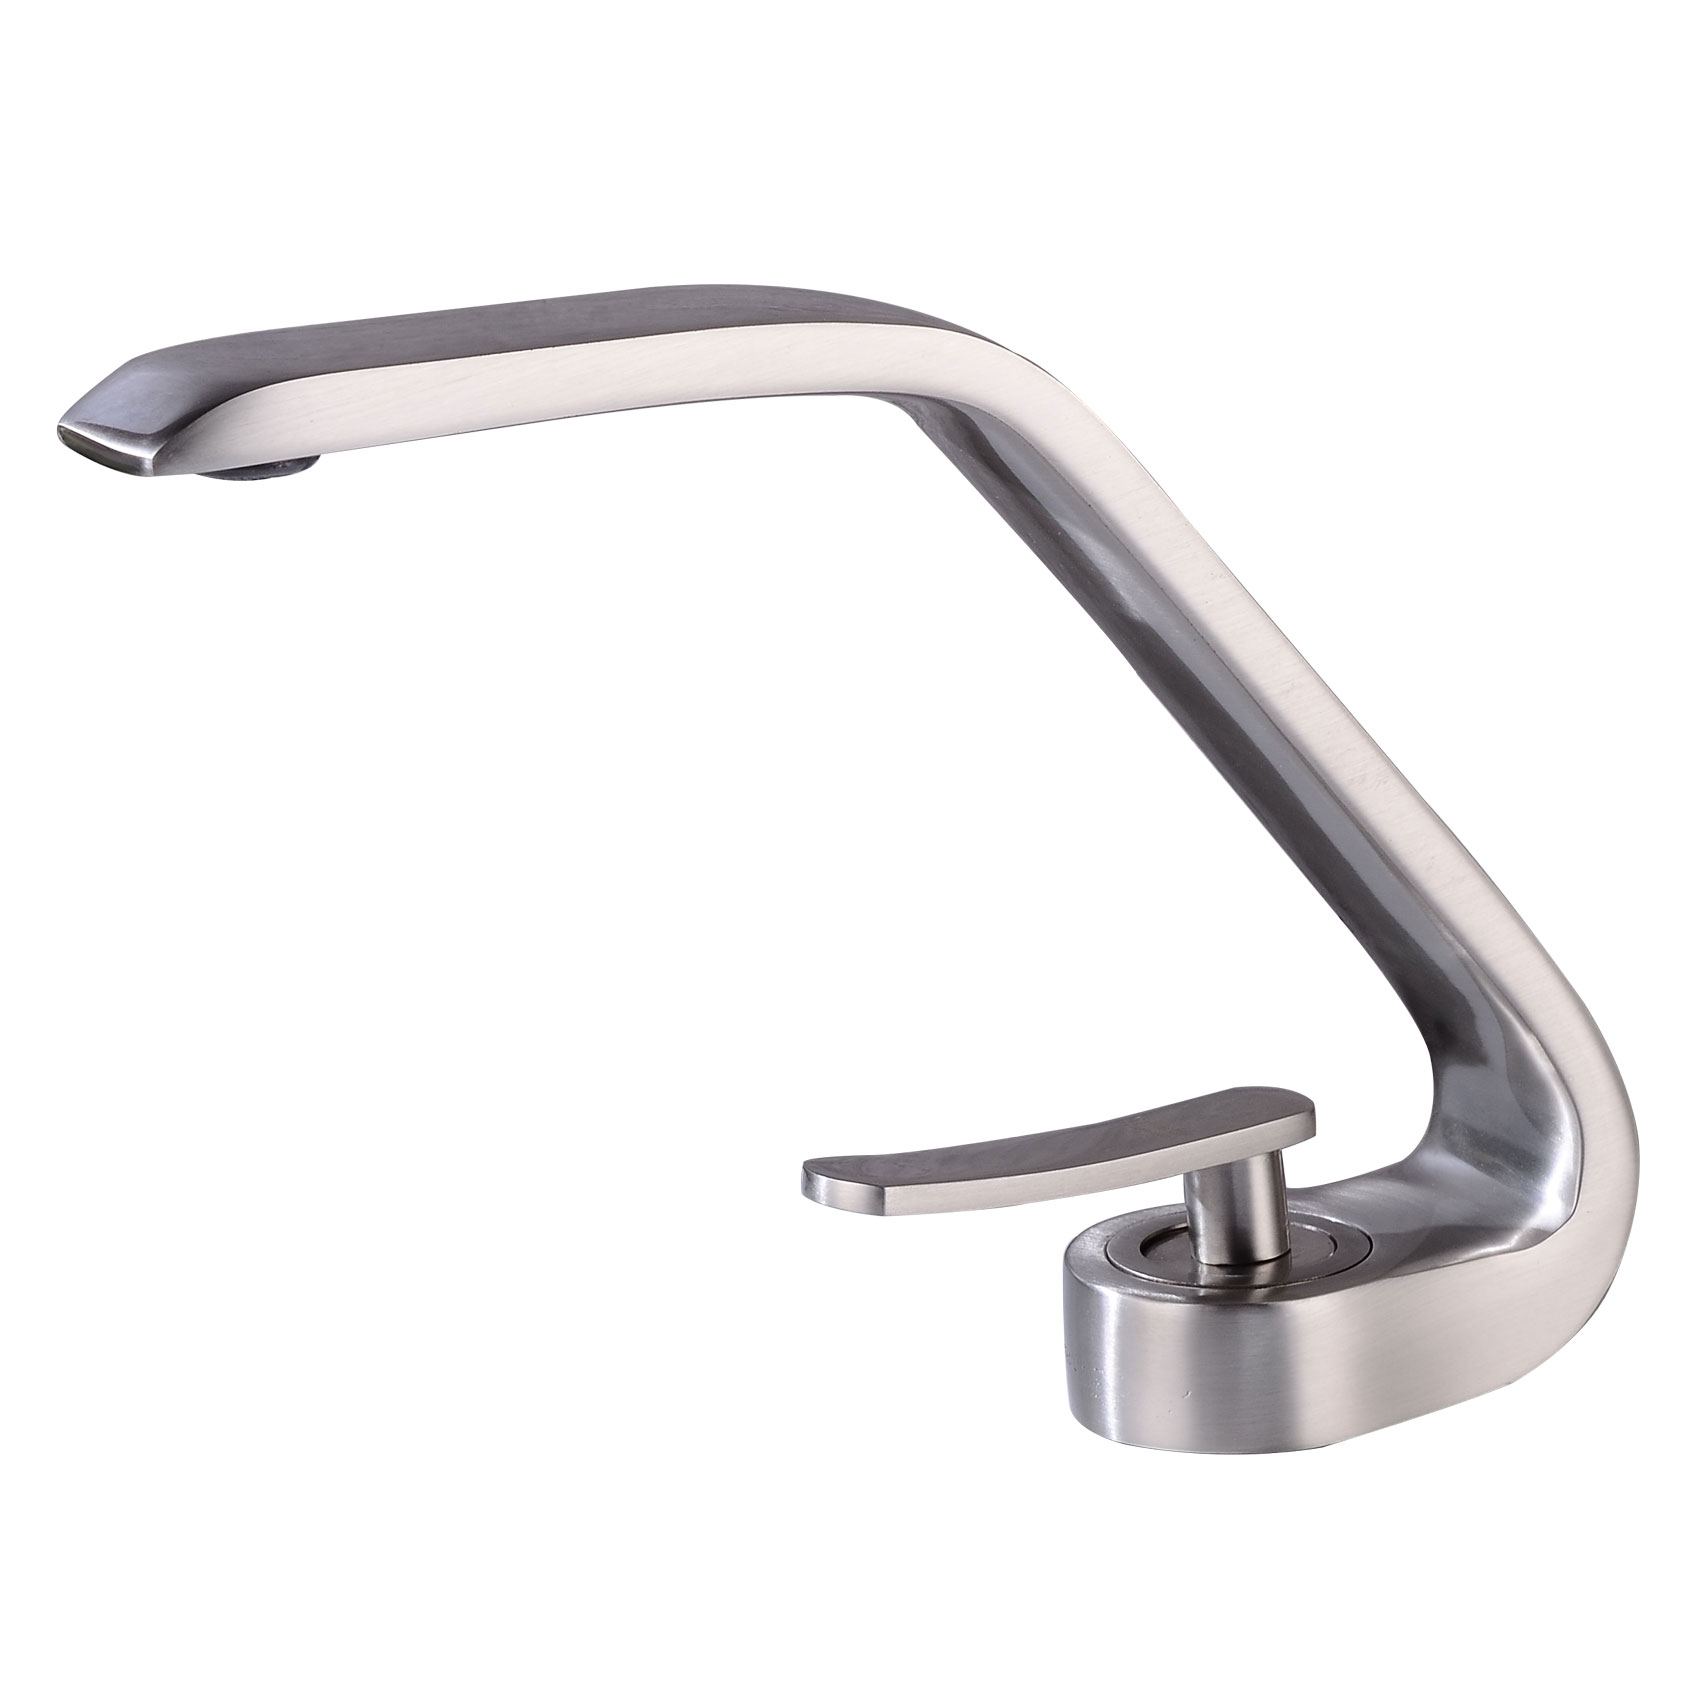 Wovier Bathroom Sink Faucet with Supply Hose,Single Handle Single Hole Lavatory Faucet W8348-1